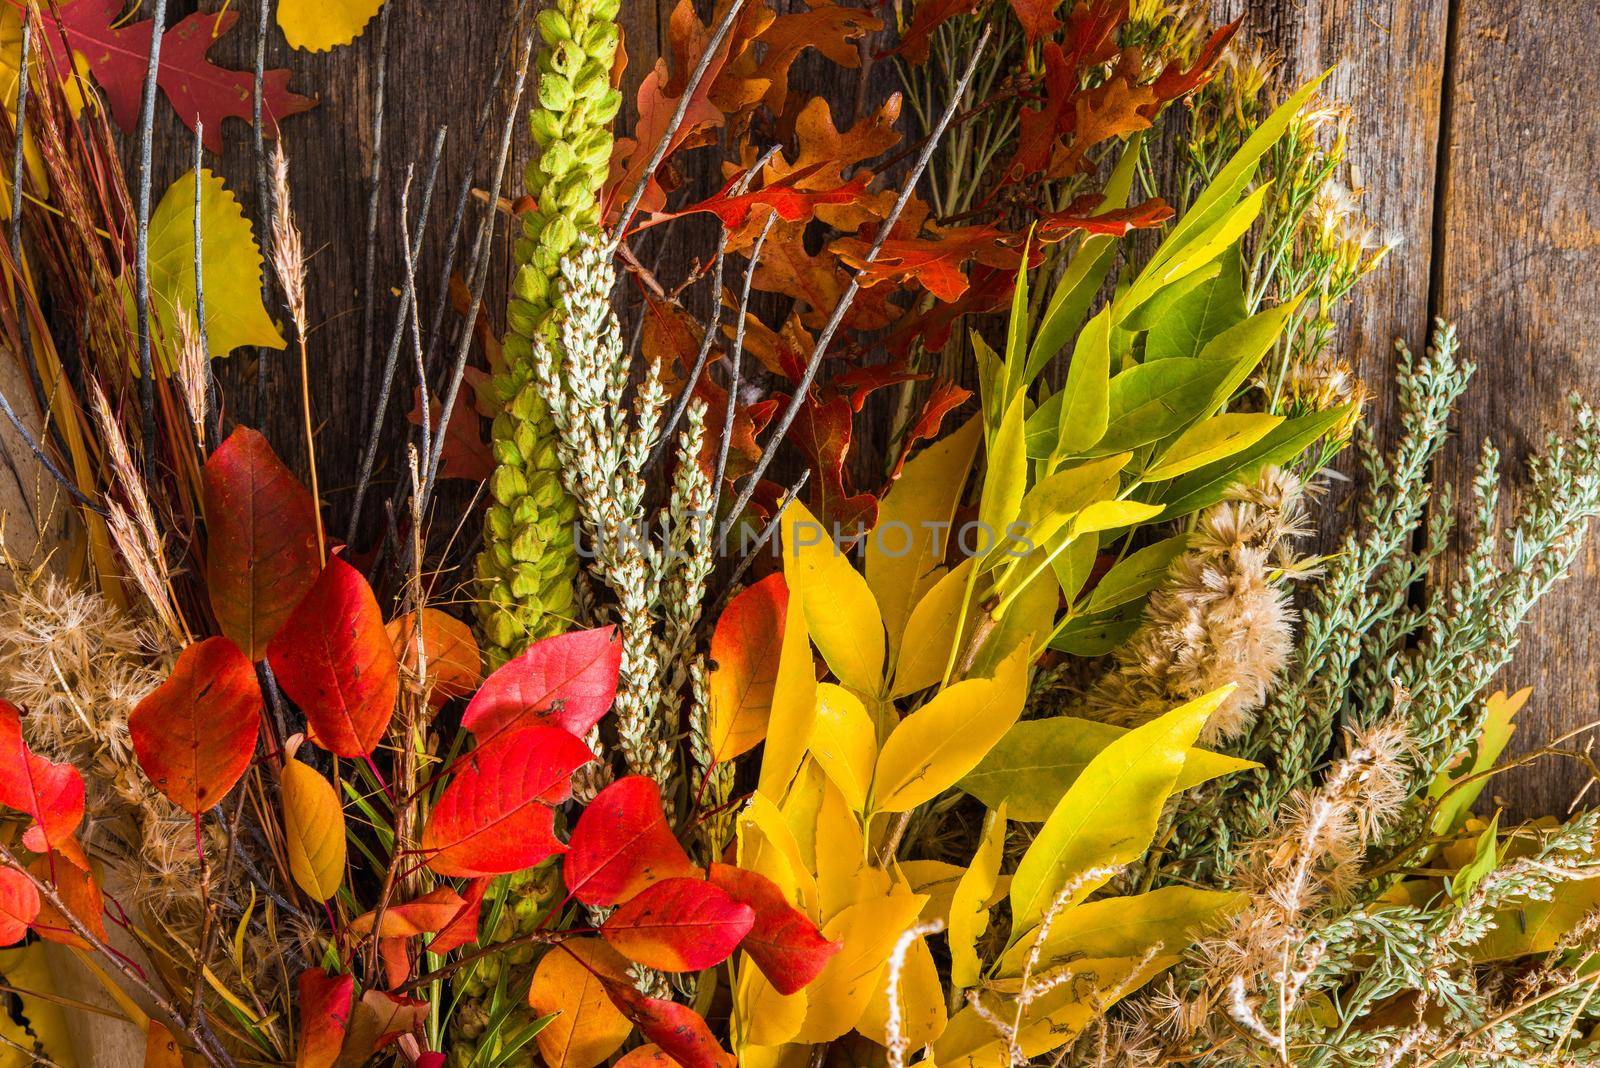 Colorful Fall Bouquet. Colorful Fall Plants Composition For a Home Decoration. Autumn Foliage Decorative Elements.